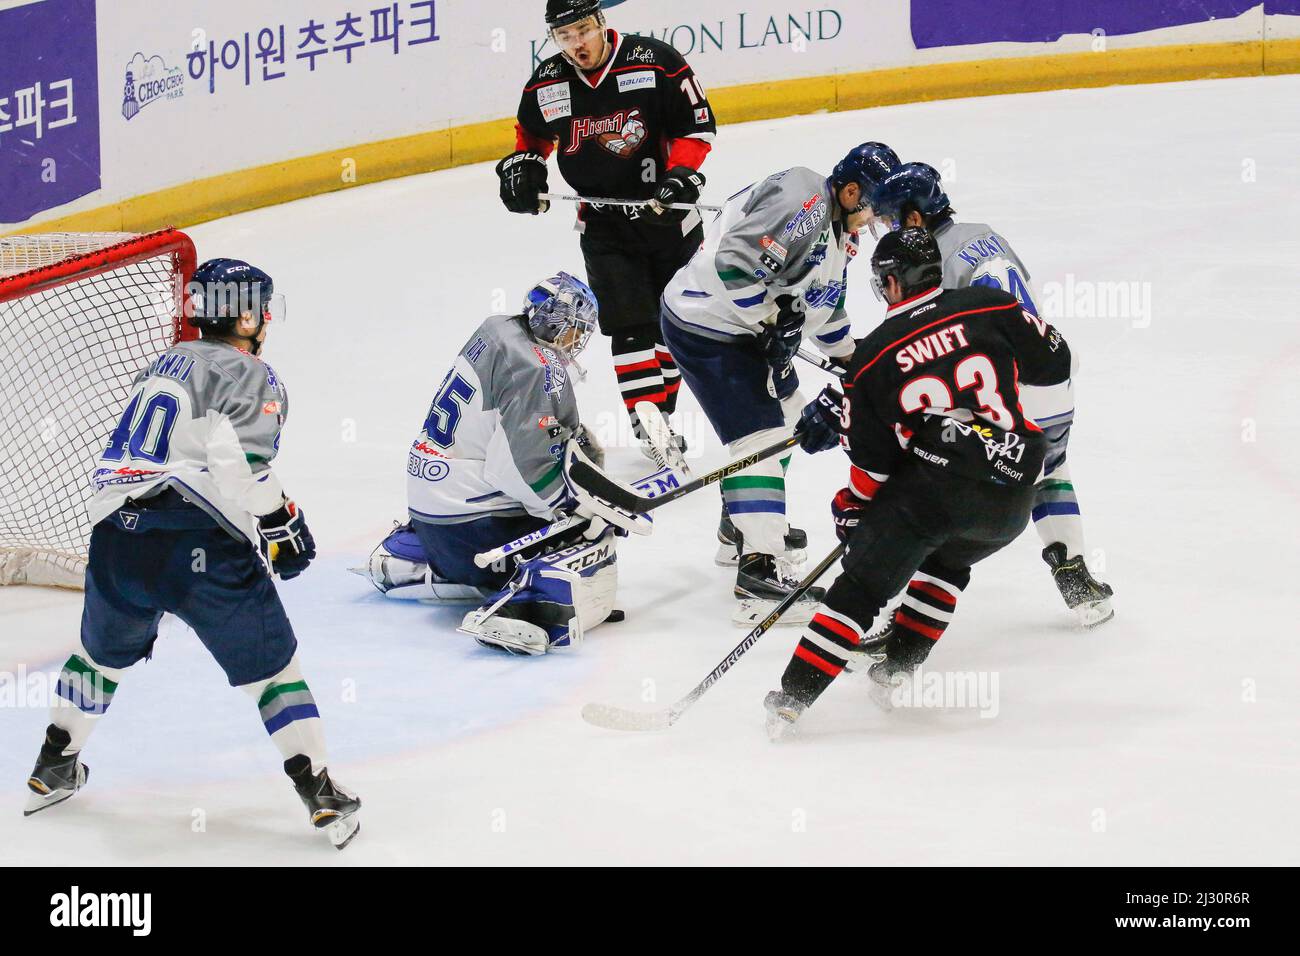 26. September 2015 - Südkorea, Goyang : Tohoku Ice Blades of Japan und High 1 of South Korea spielen während der Asia Ice Hockey League 2015 bei Goyang Ice Link in Gyeong Gi, Südkorea. Heute gewann das Spiel Tohoku Ice Blades, Score 6-2. Stockfoto